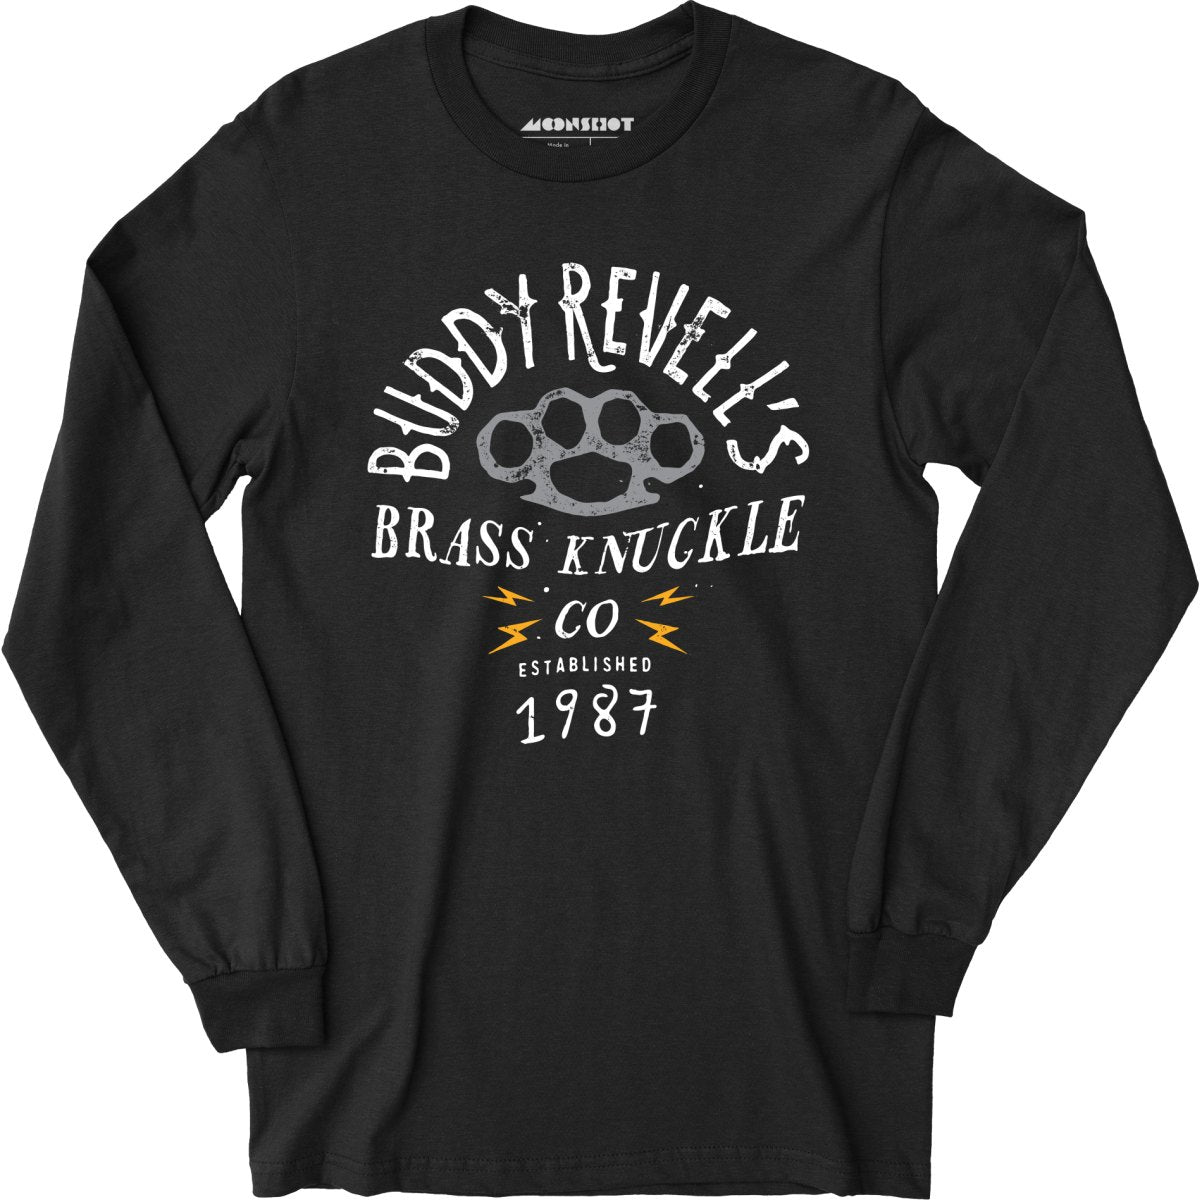 Buddy Revell's Brass Knuckle Co. - Long Sleeve T-Shirt